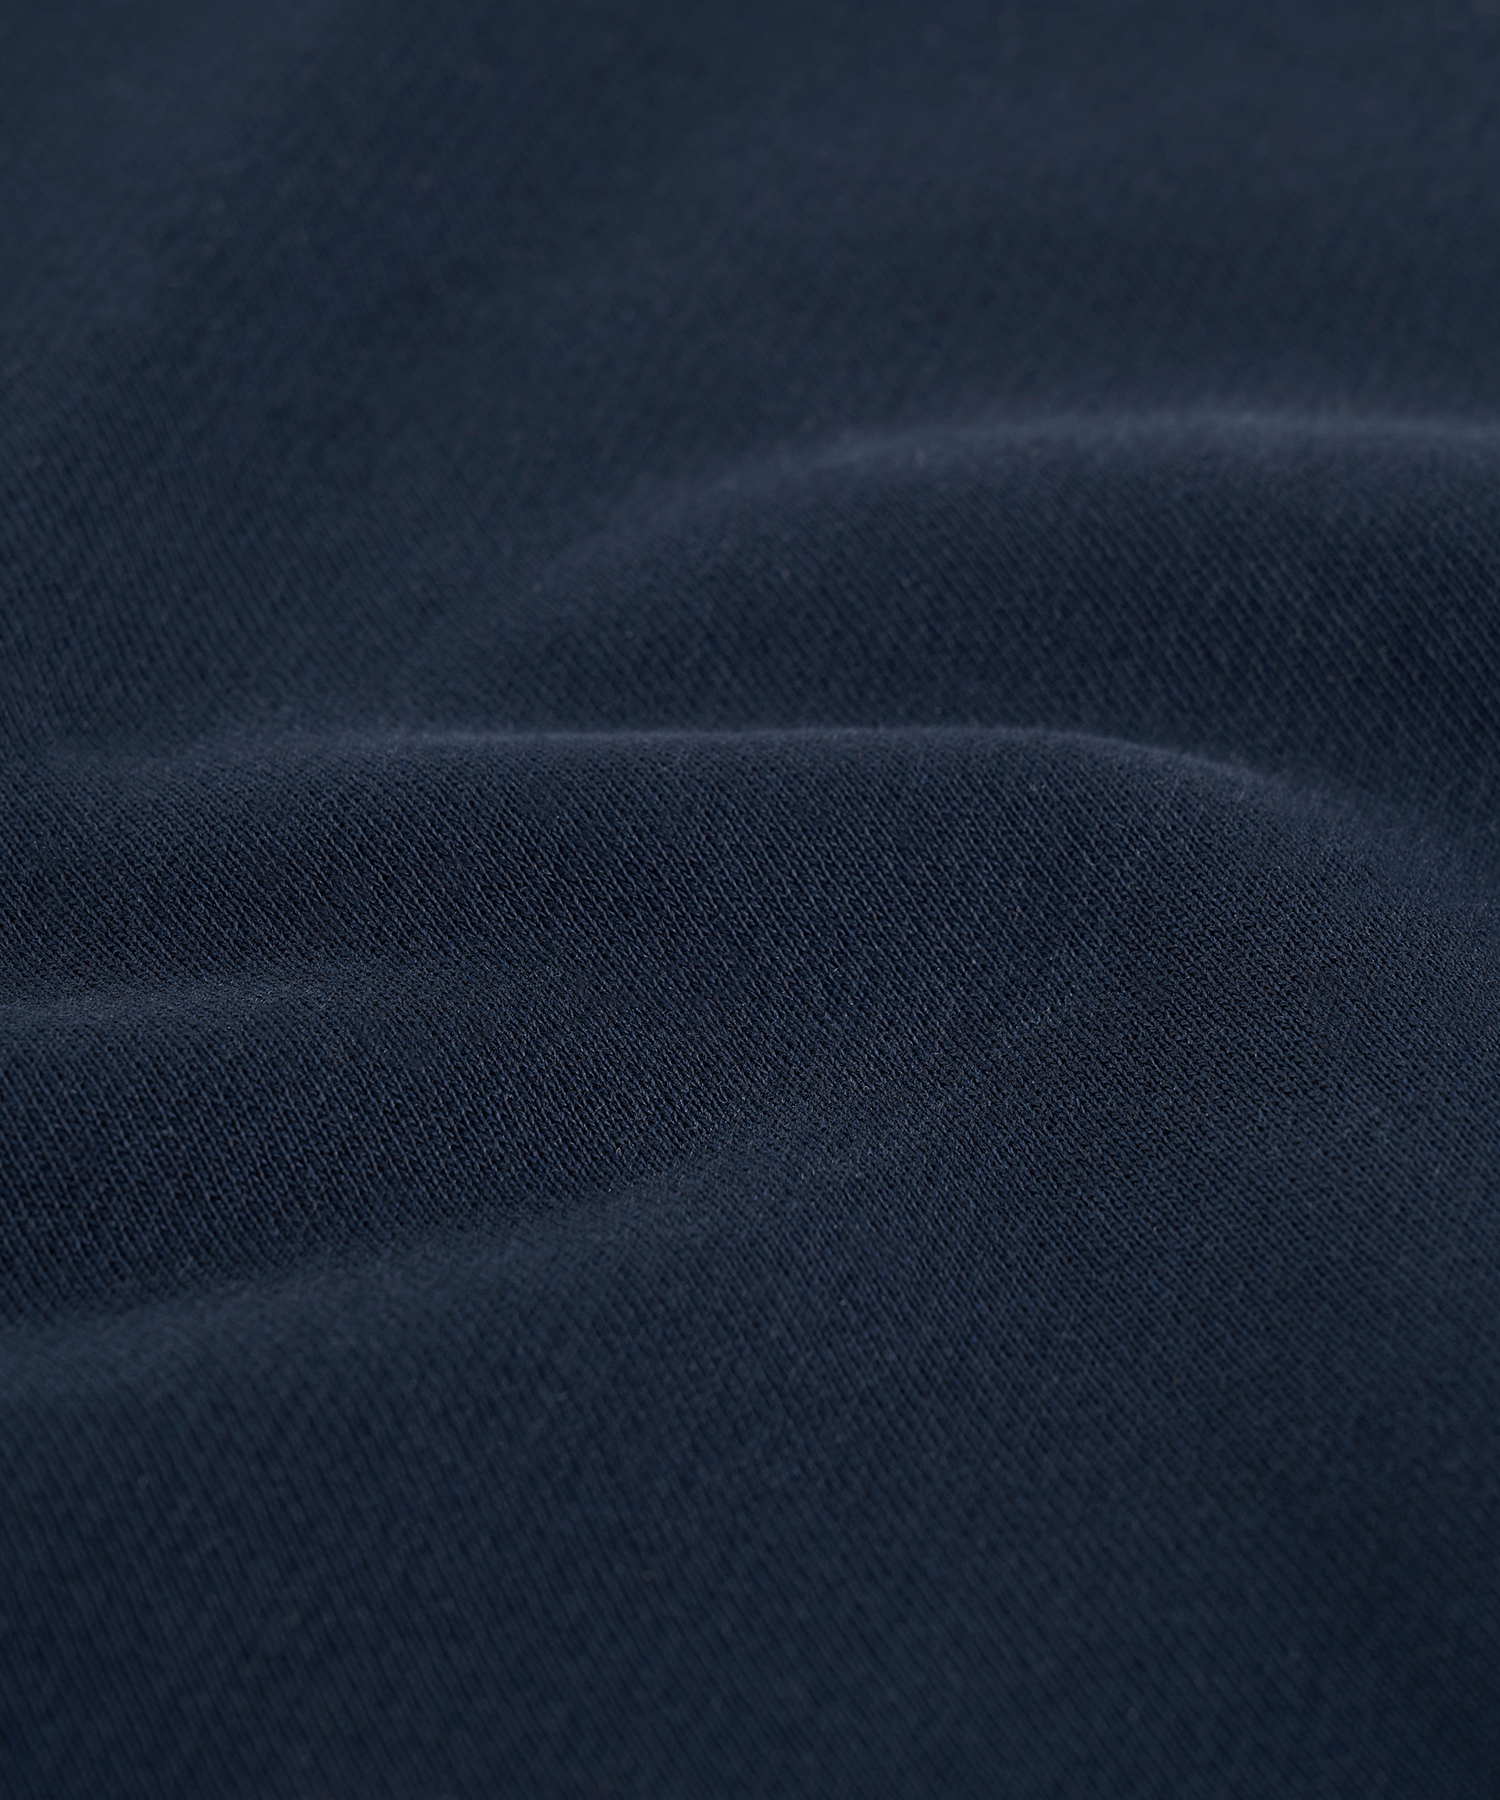 SOCI3TY sweater blauw katoen